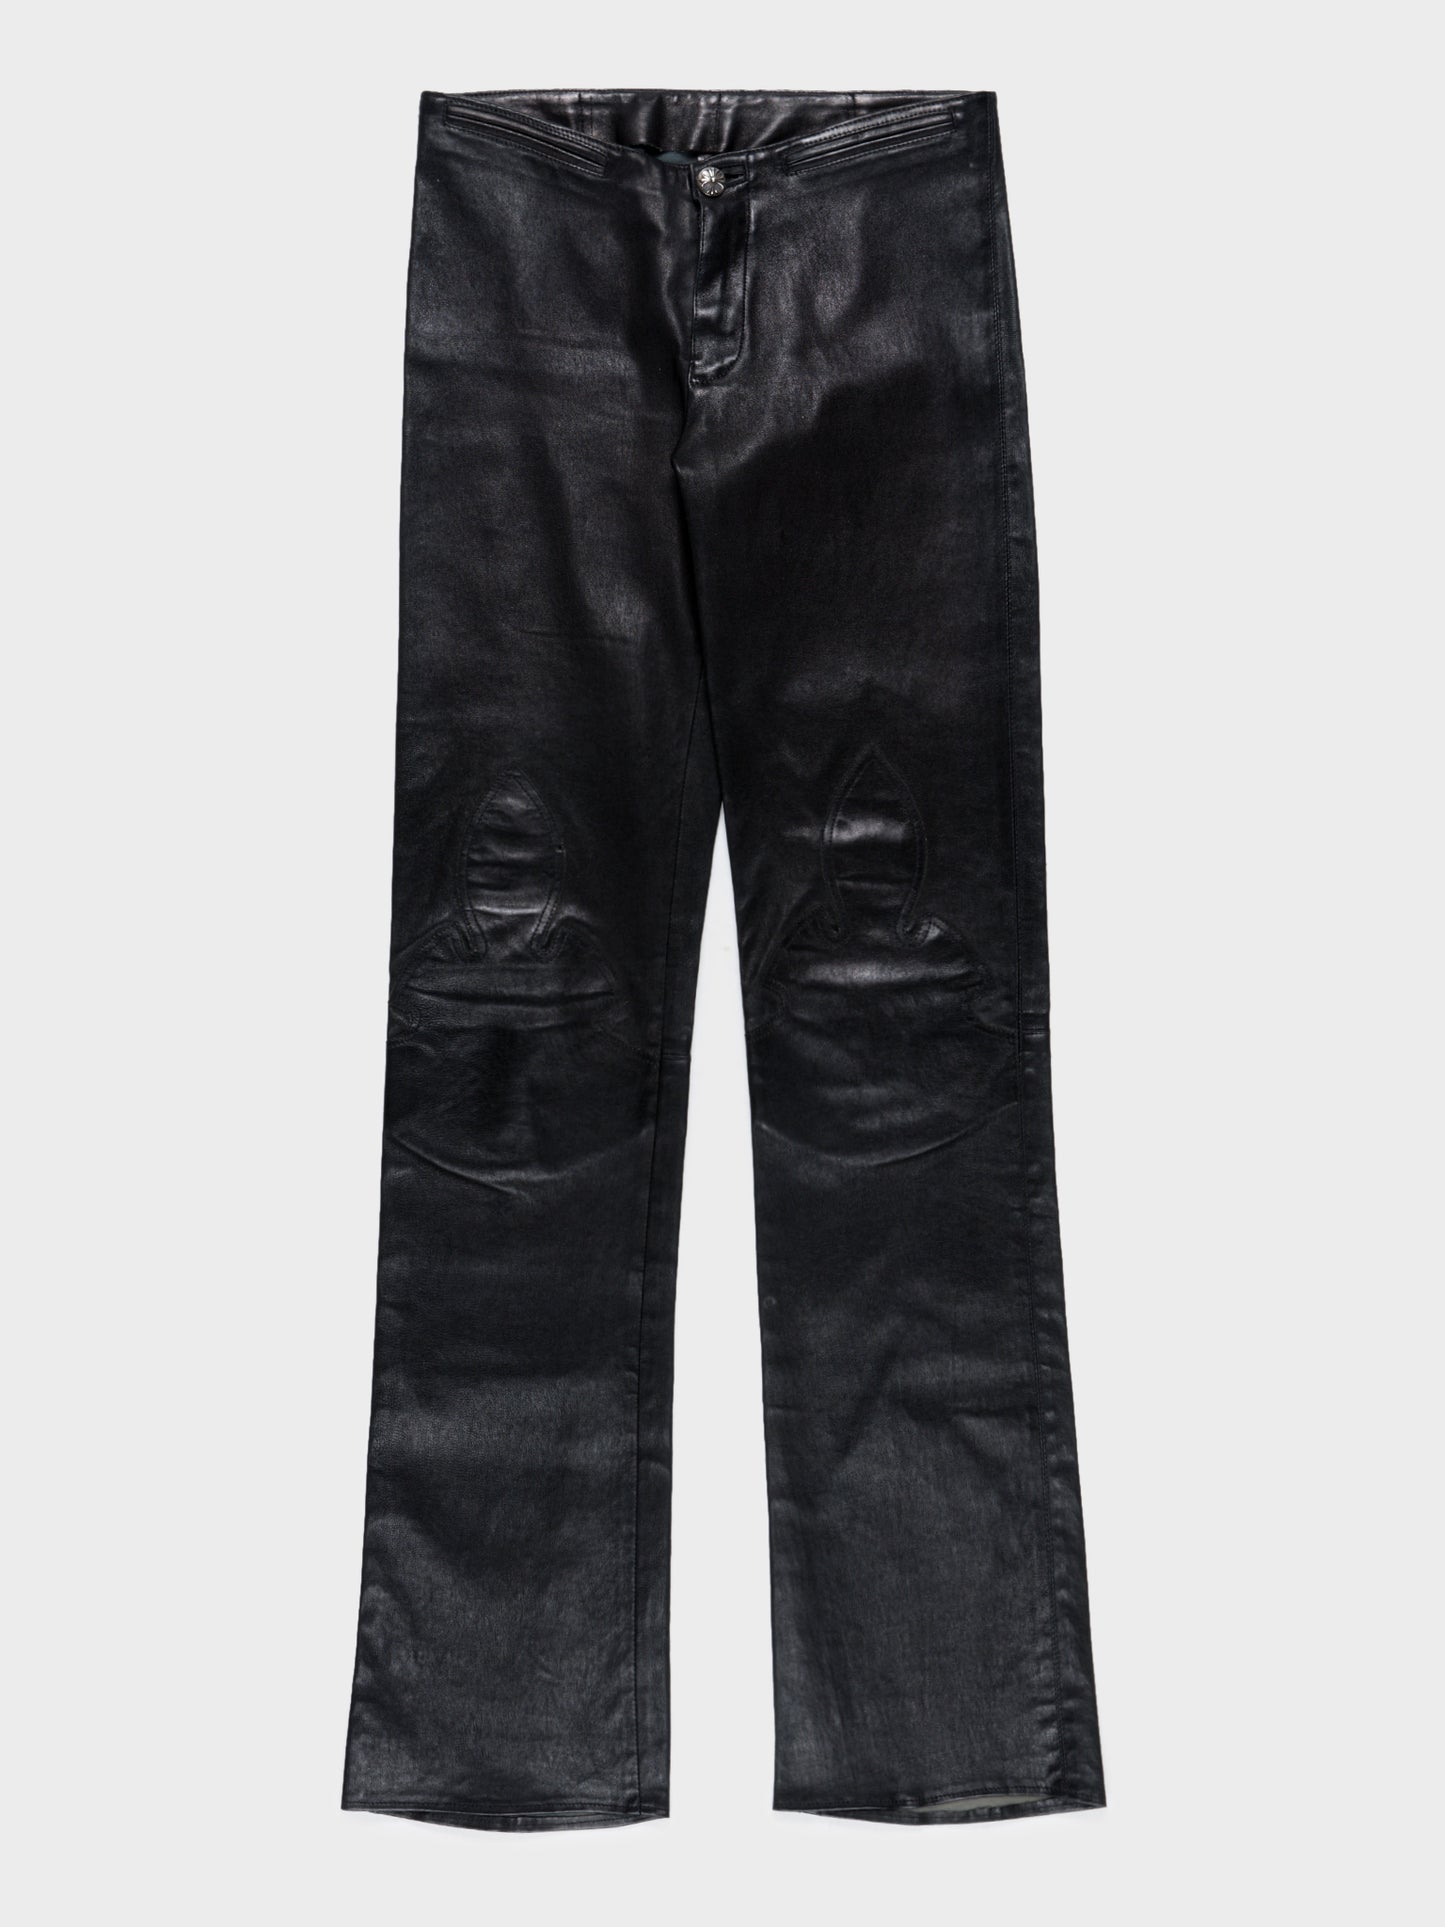 Leather Flerknee Trousers